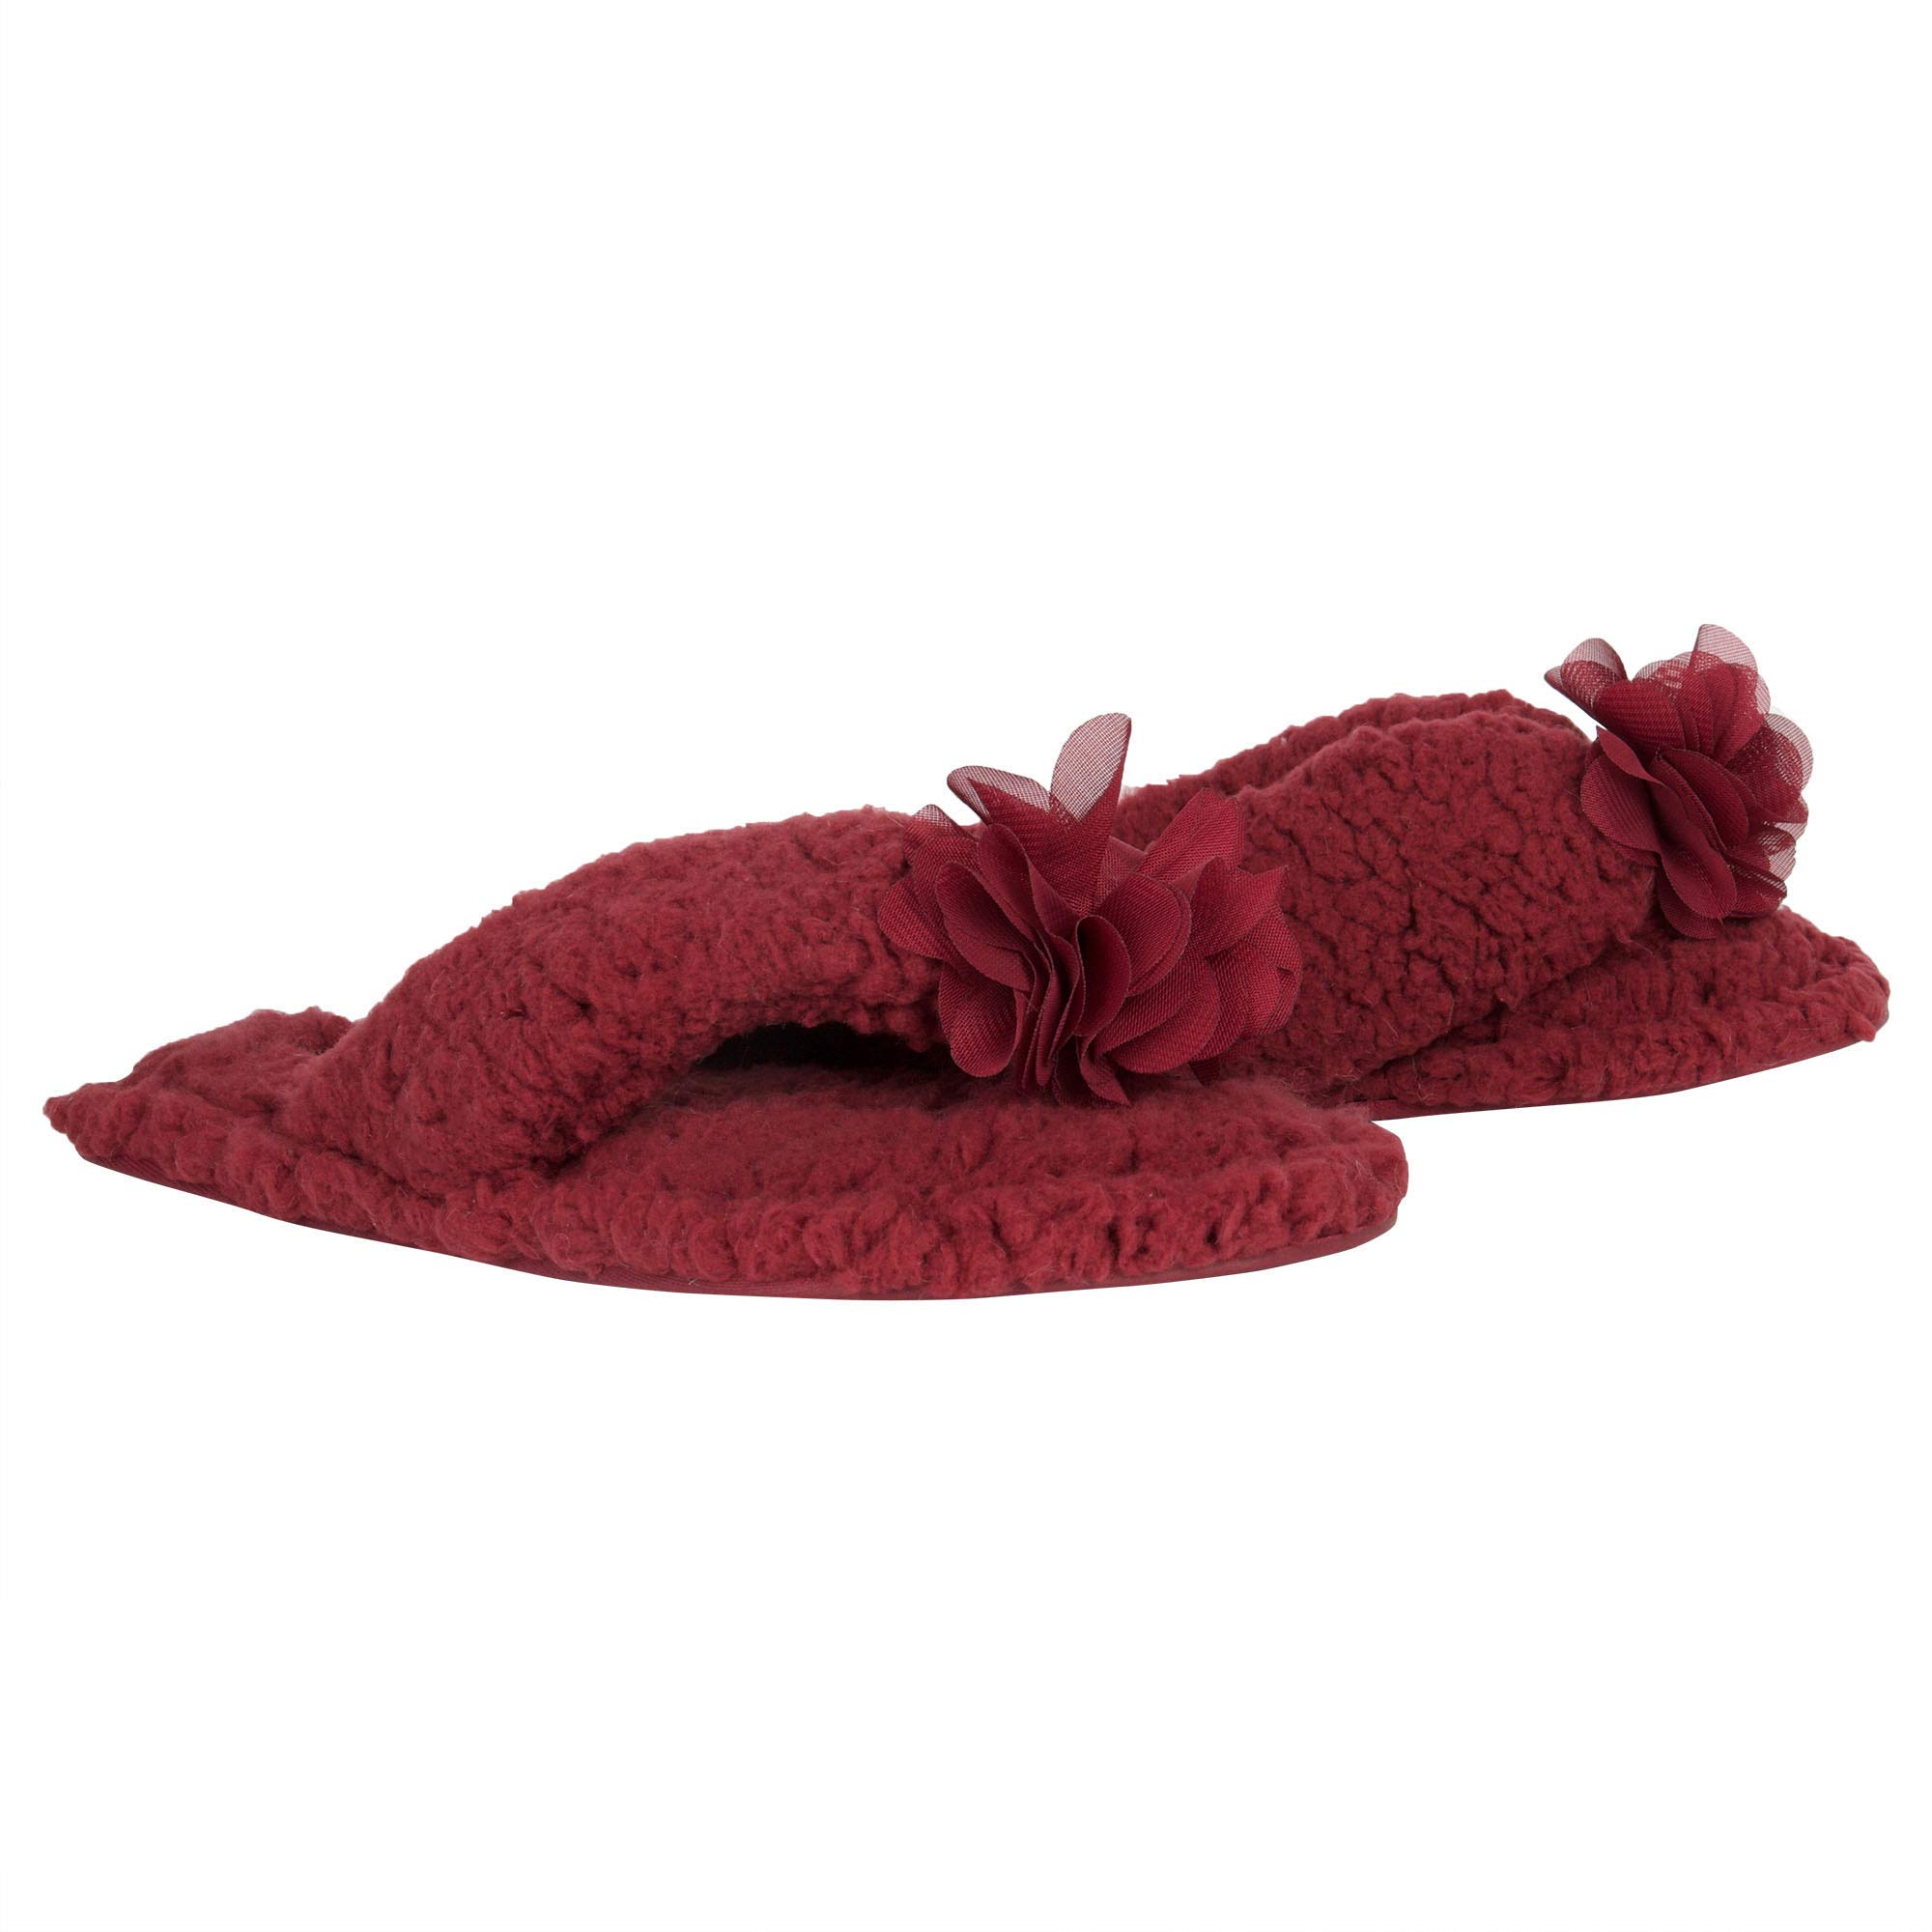 Jessica Simpson Women's Fluffy Plush Slide-On Sandal House Slippers with Memory Foam